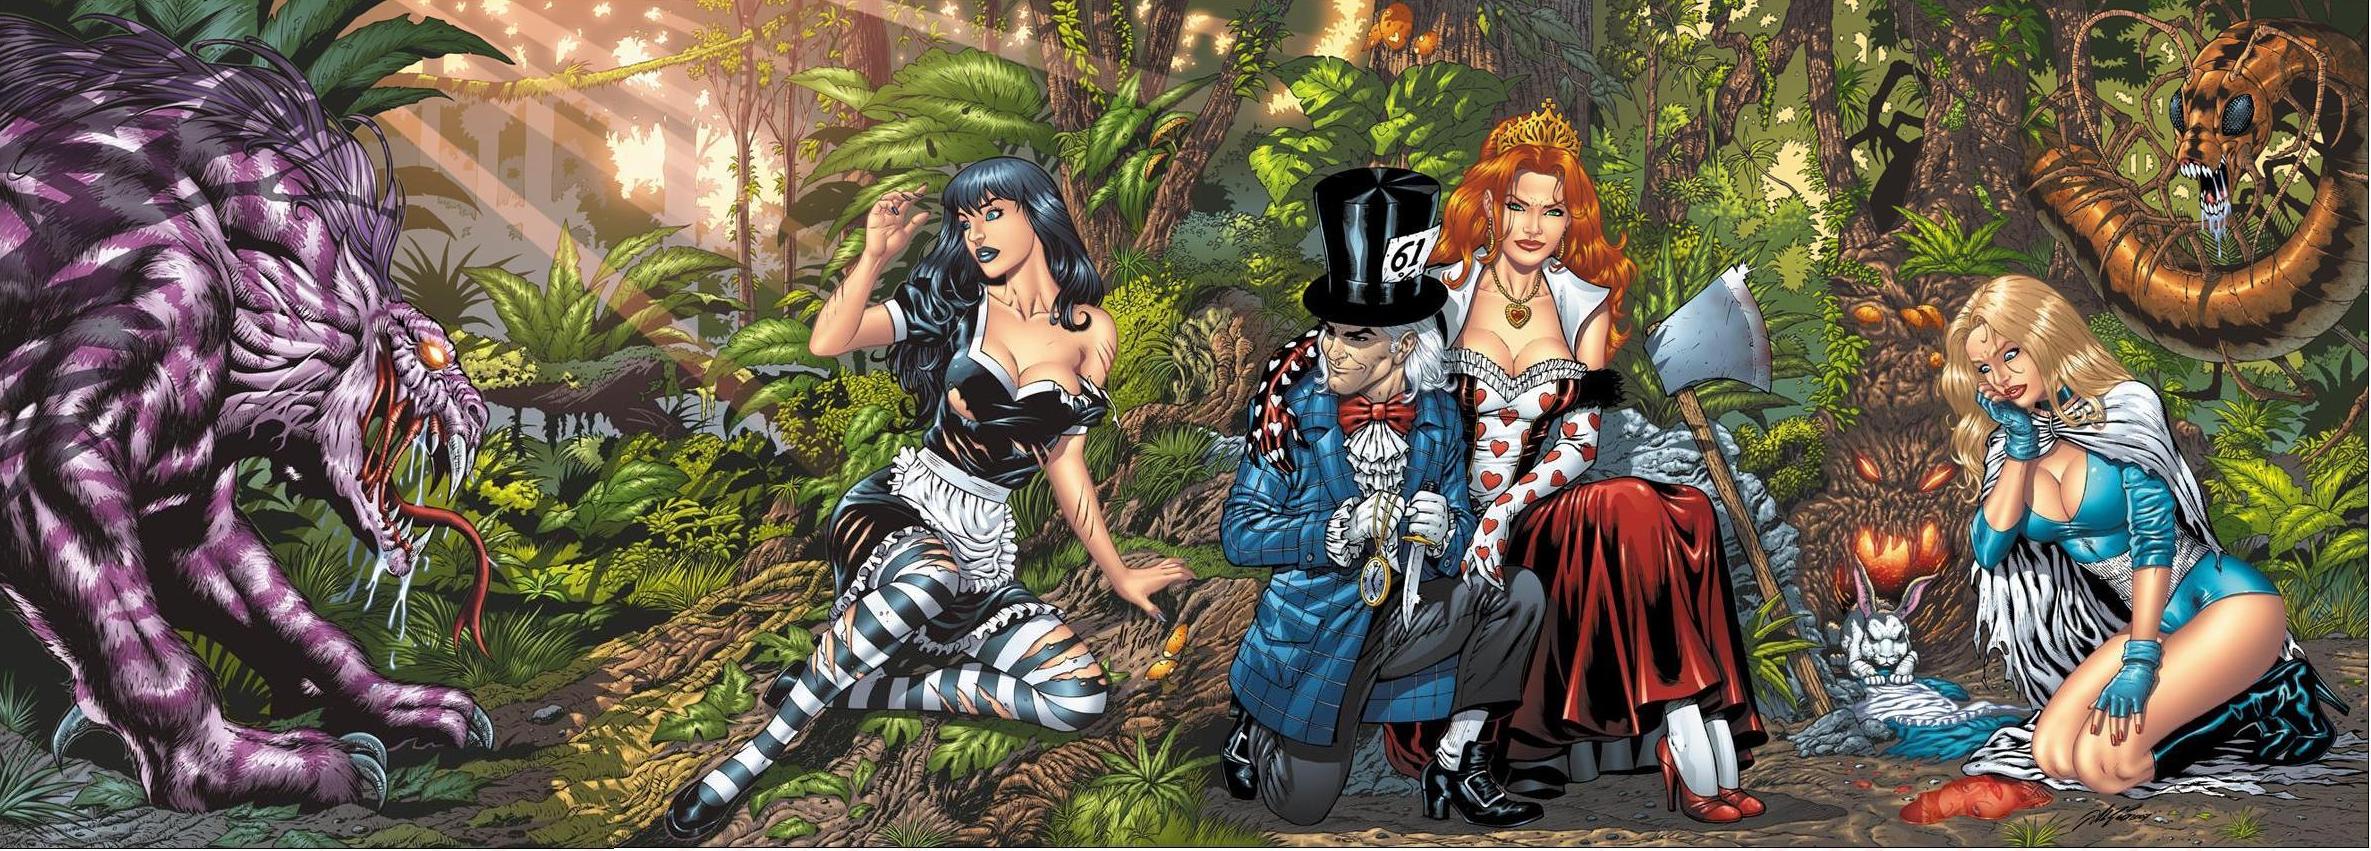 Comics Grimm Fairy Tales: Return To Wonderland HD Wallpaper | Background Image